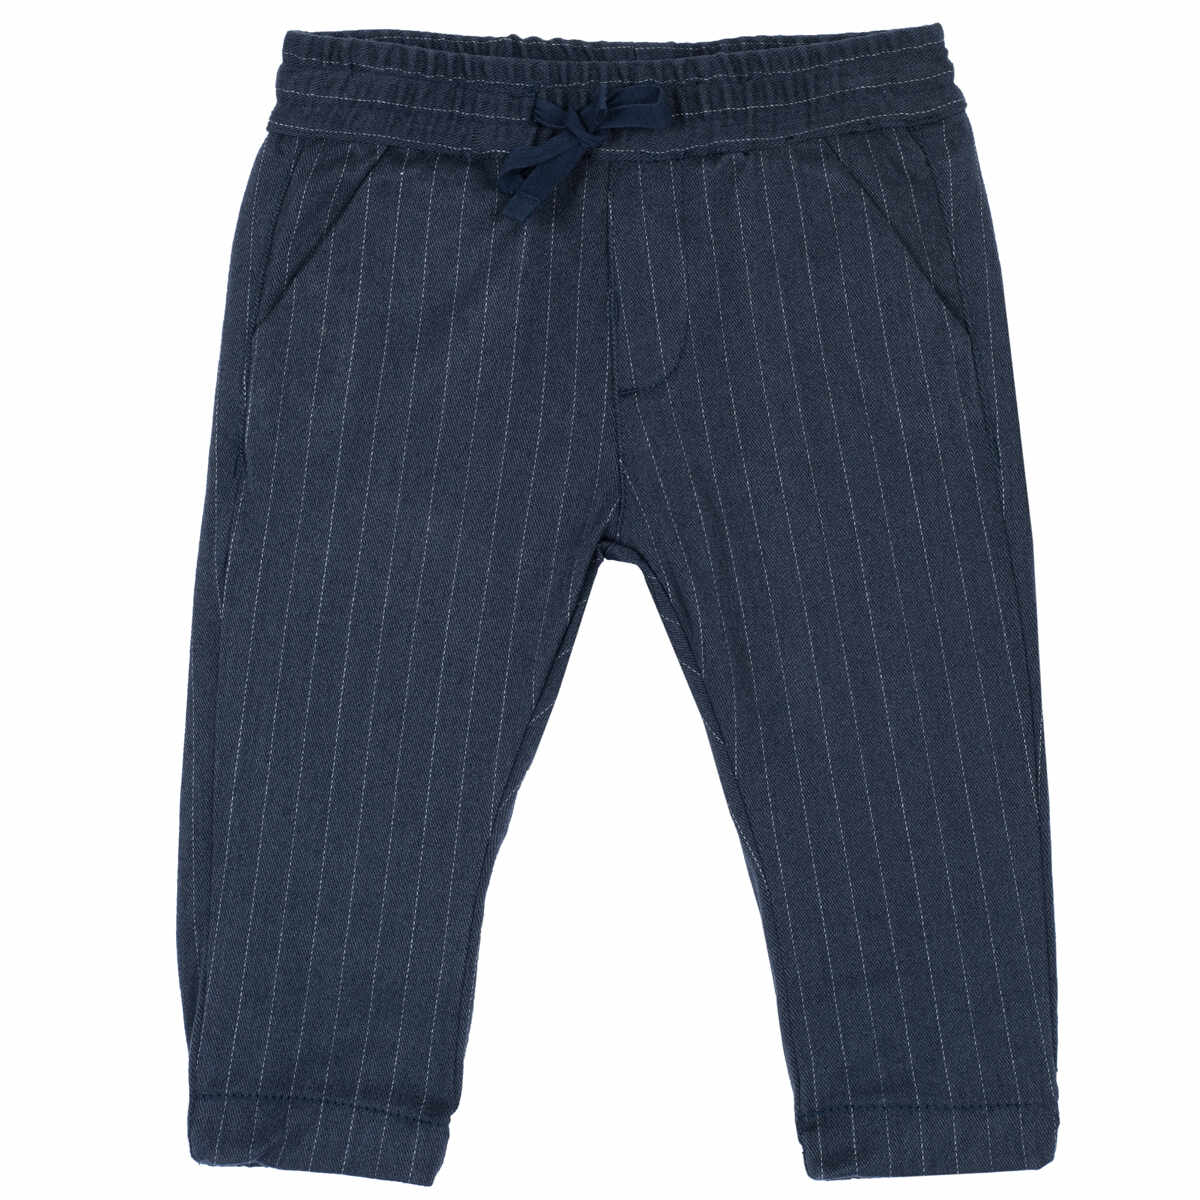 Pantalon lung copii Chicco, albastru inchis, 08027